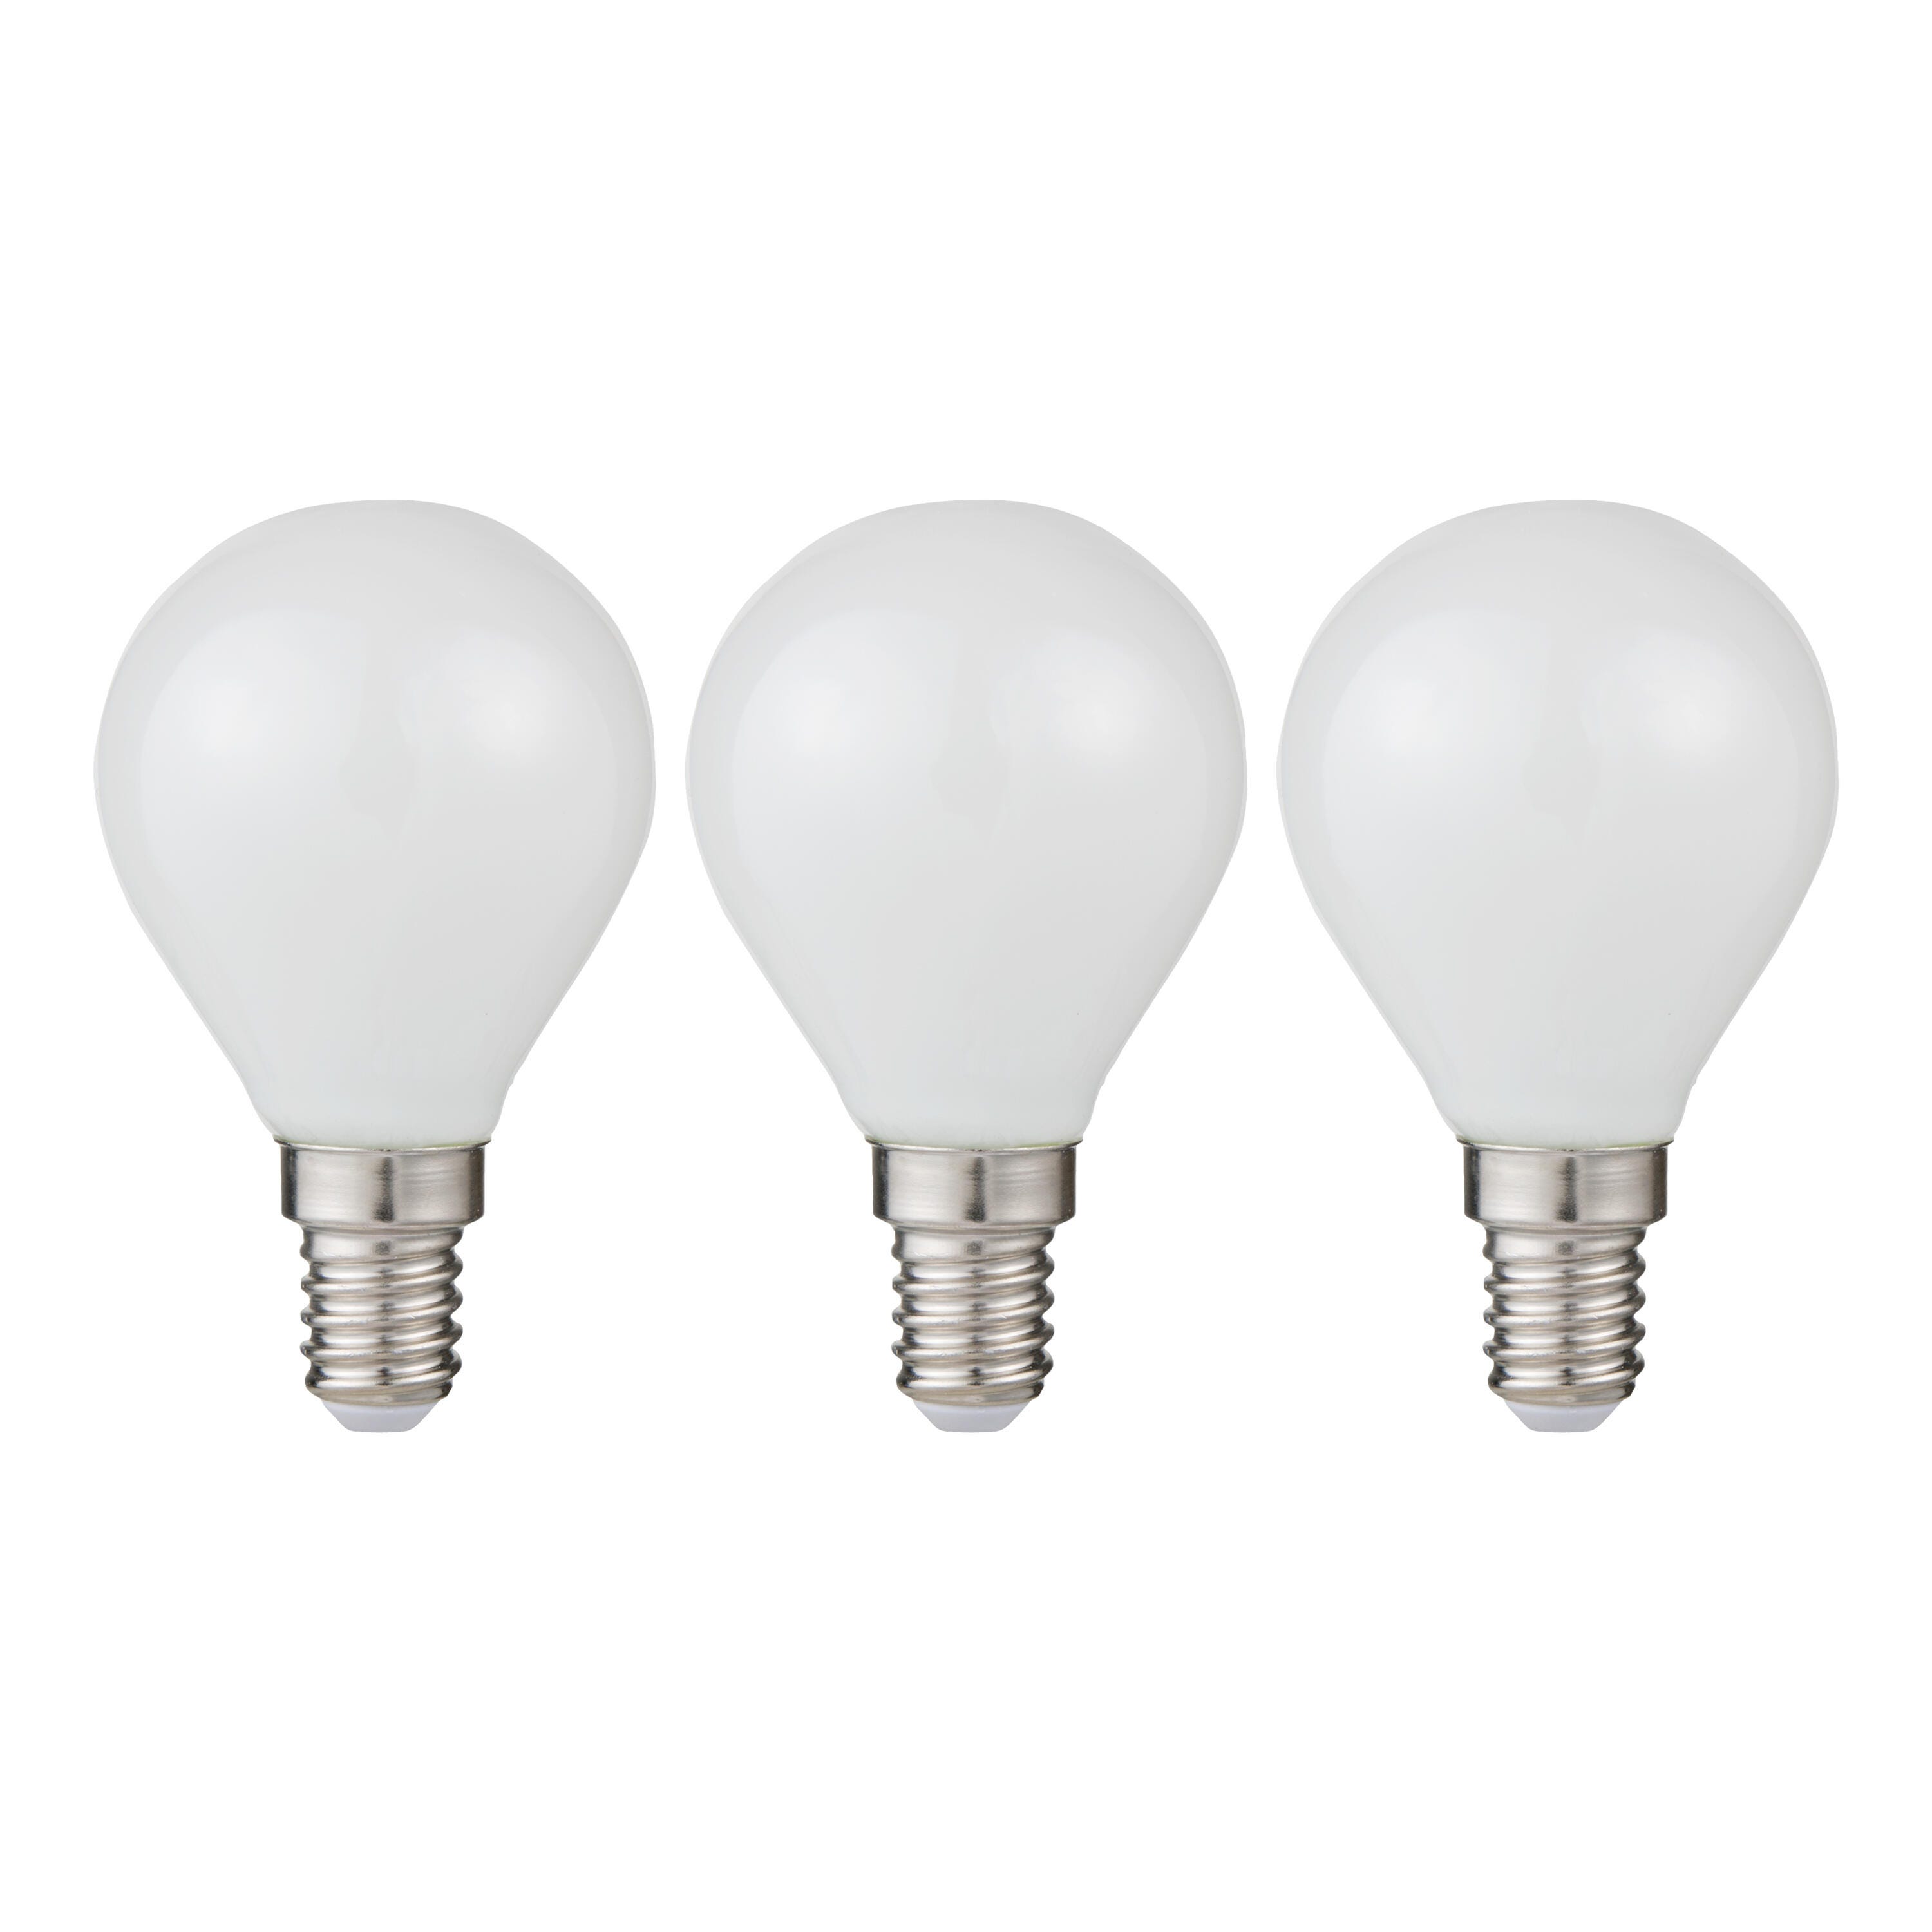 8 ampoules LED E14 bougie - 470 lm - Blanc chaud - Luminea